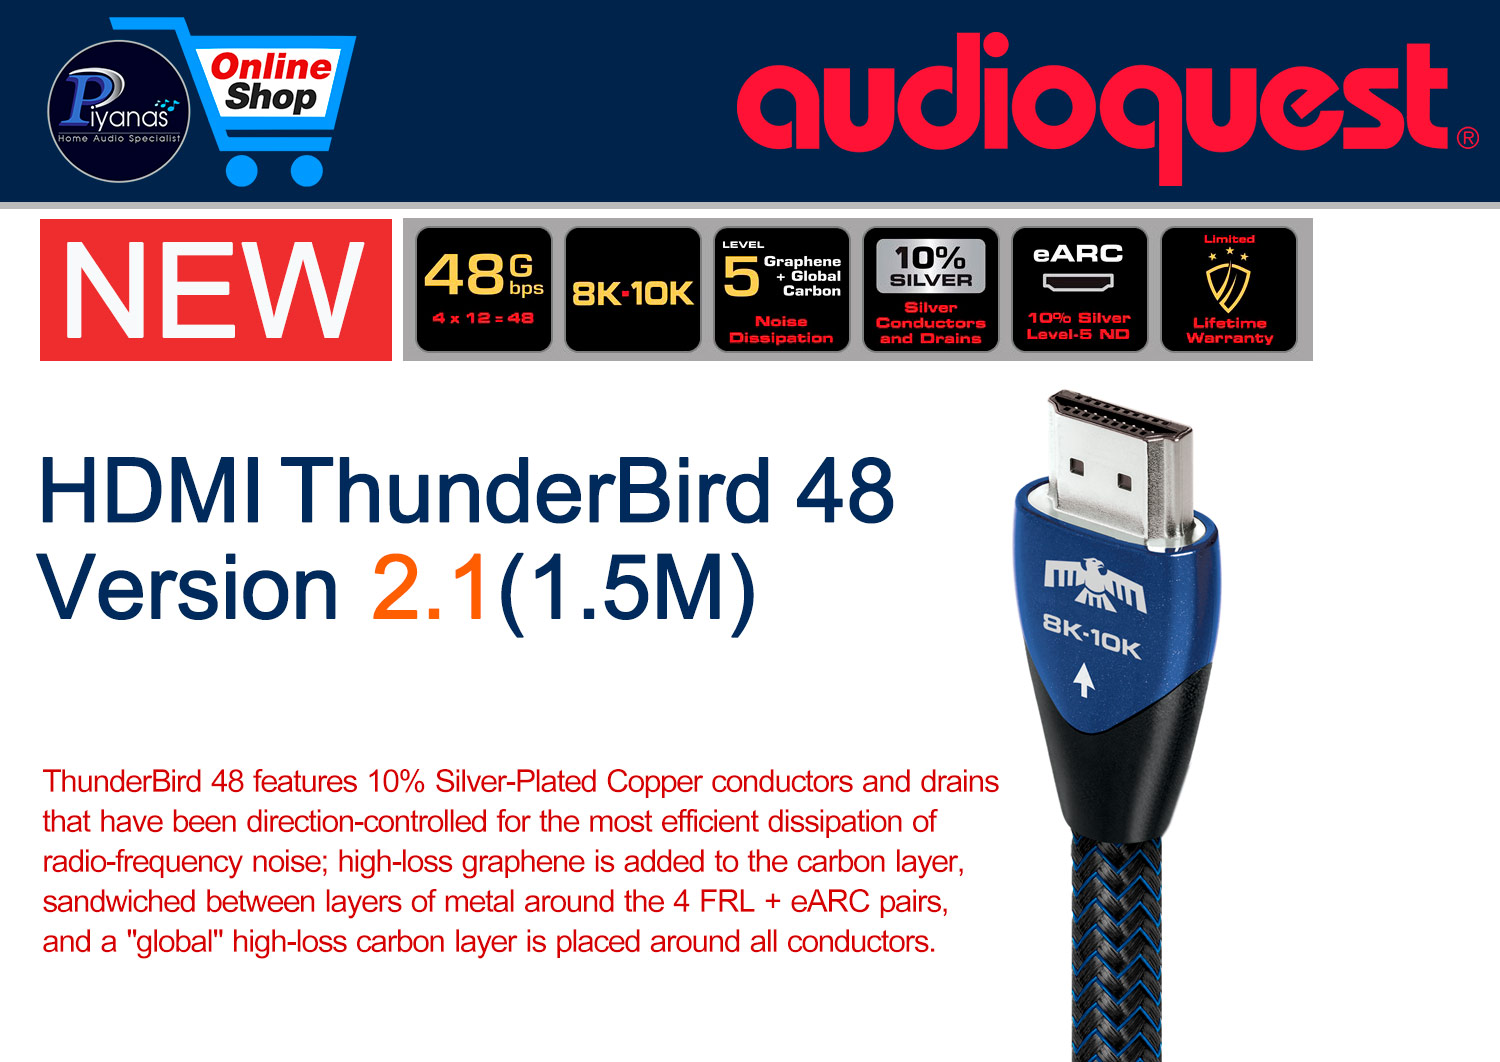 HDMI-ThunderBird 48 Version 2.1 (1.5M)